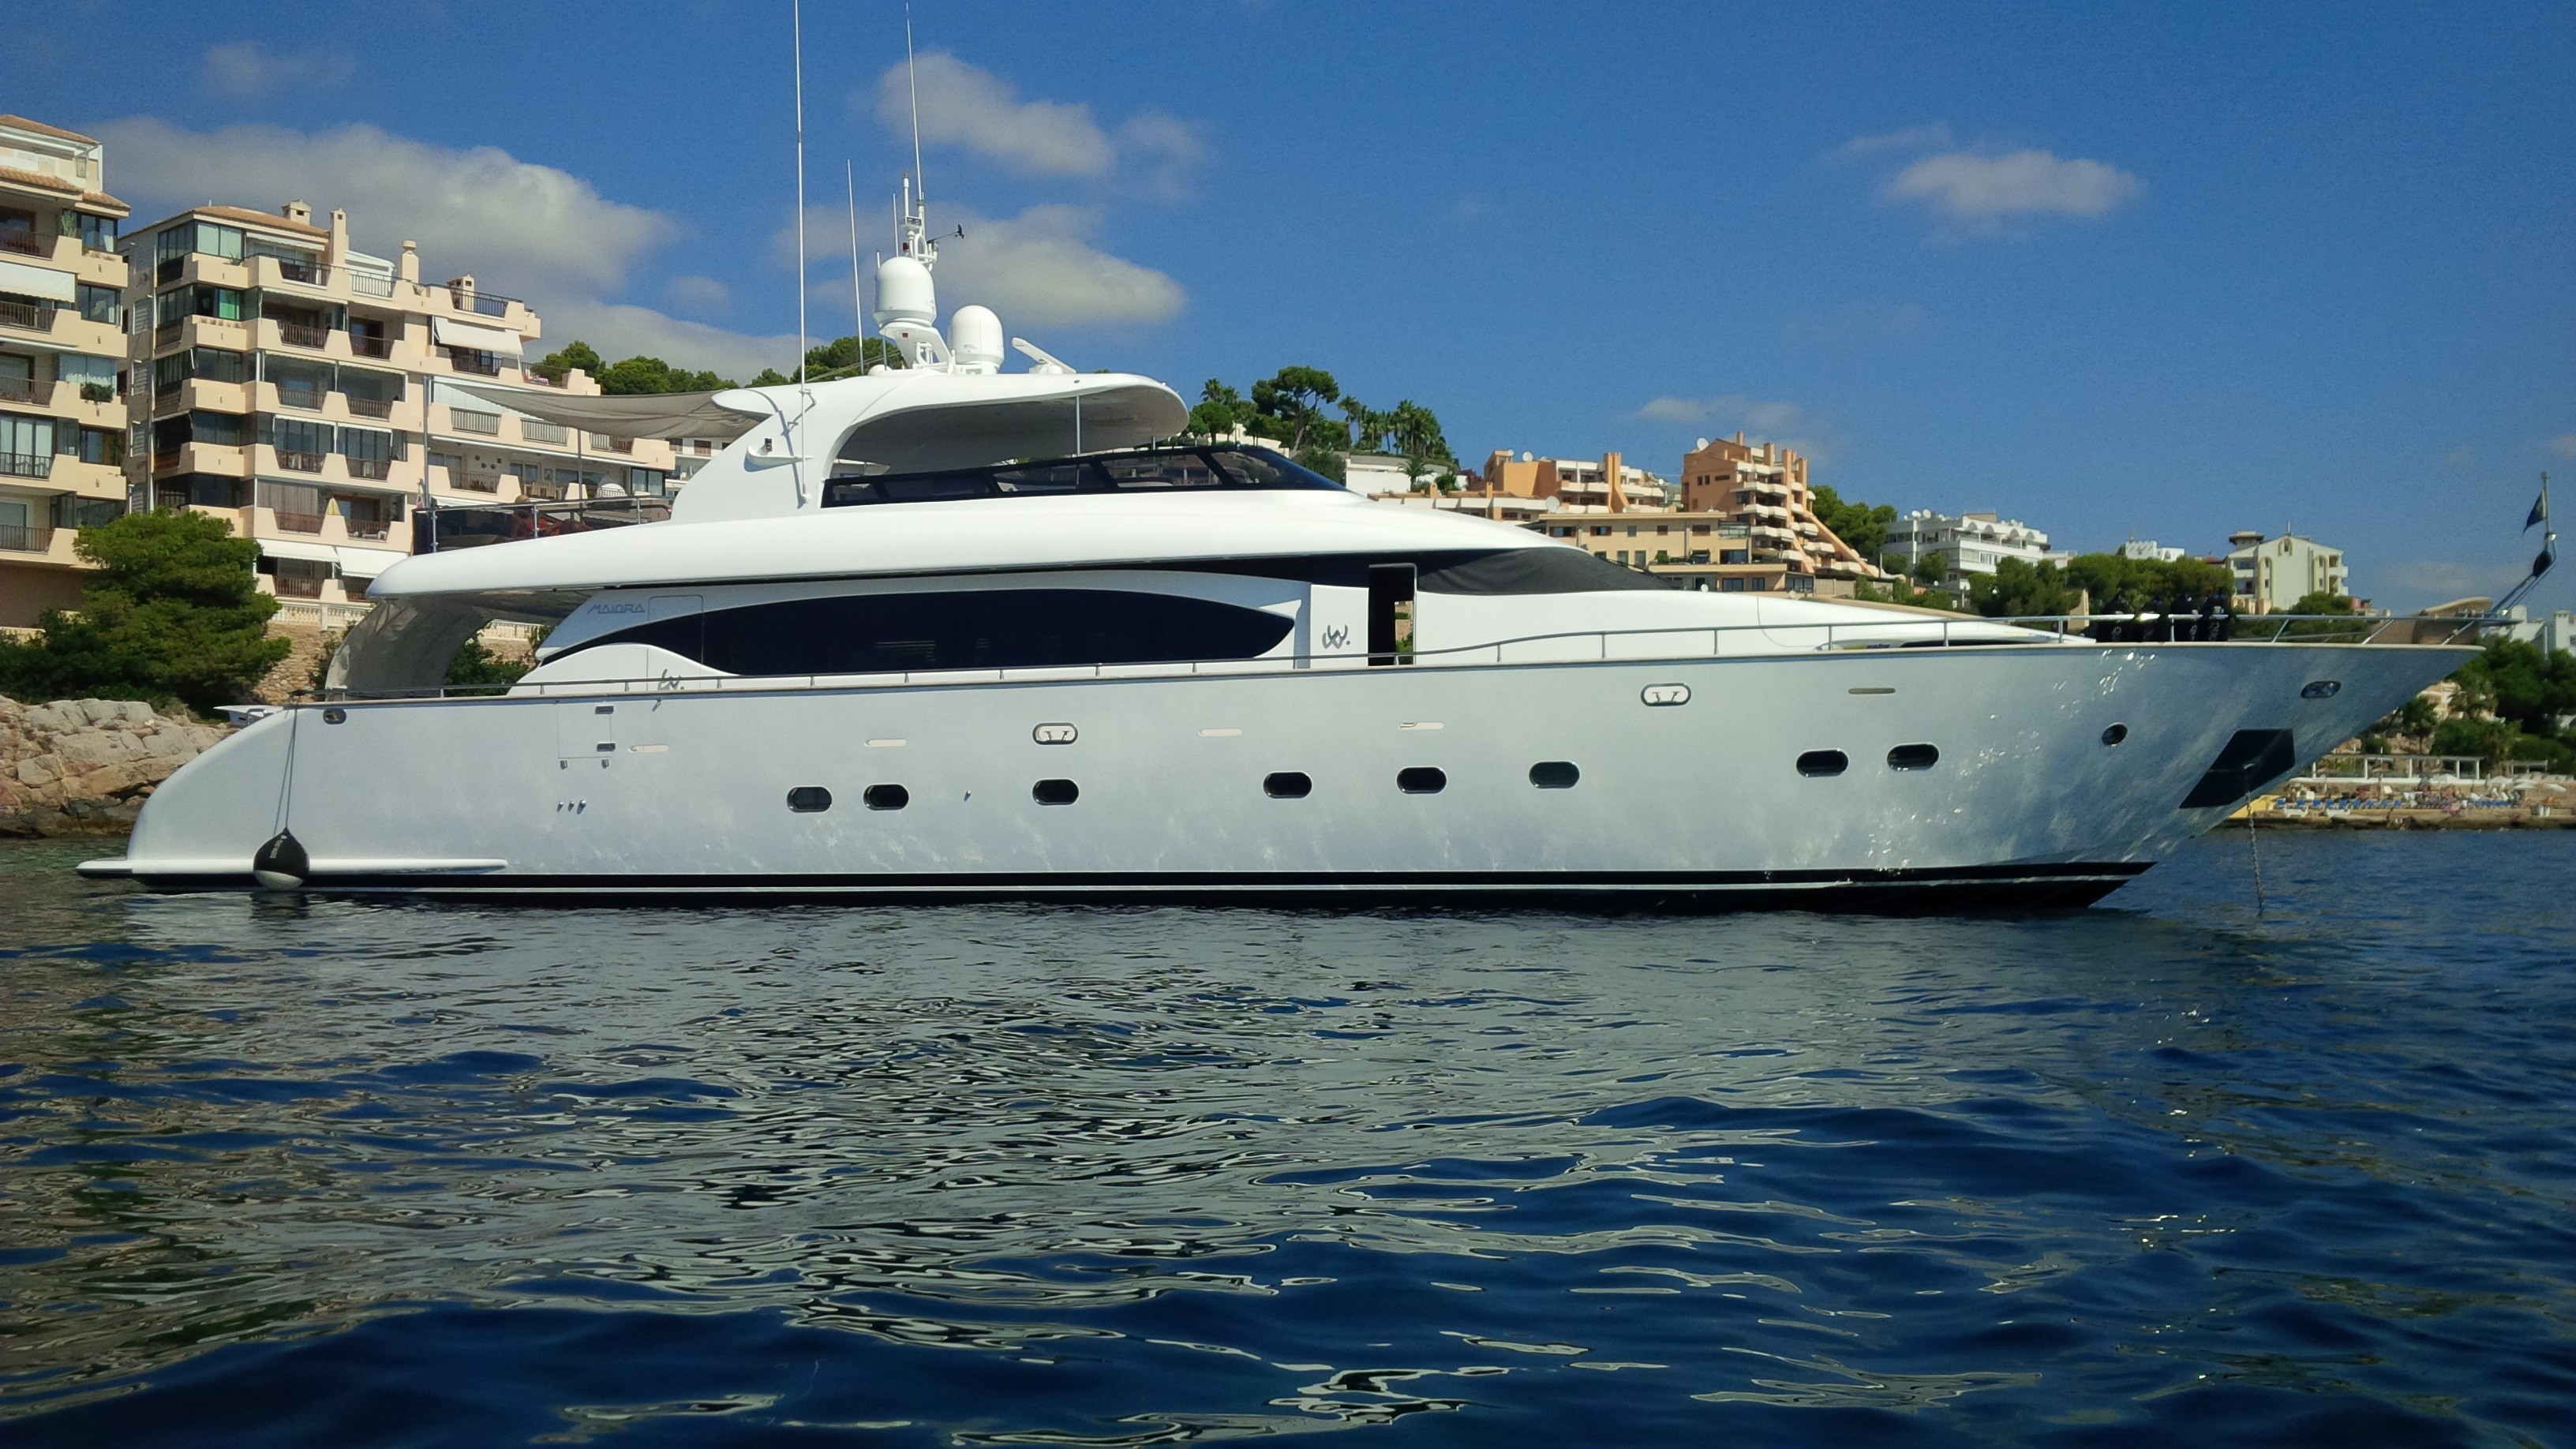 The 27m Yacht QUO VADIS - Profile